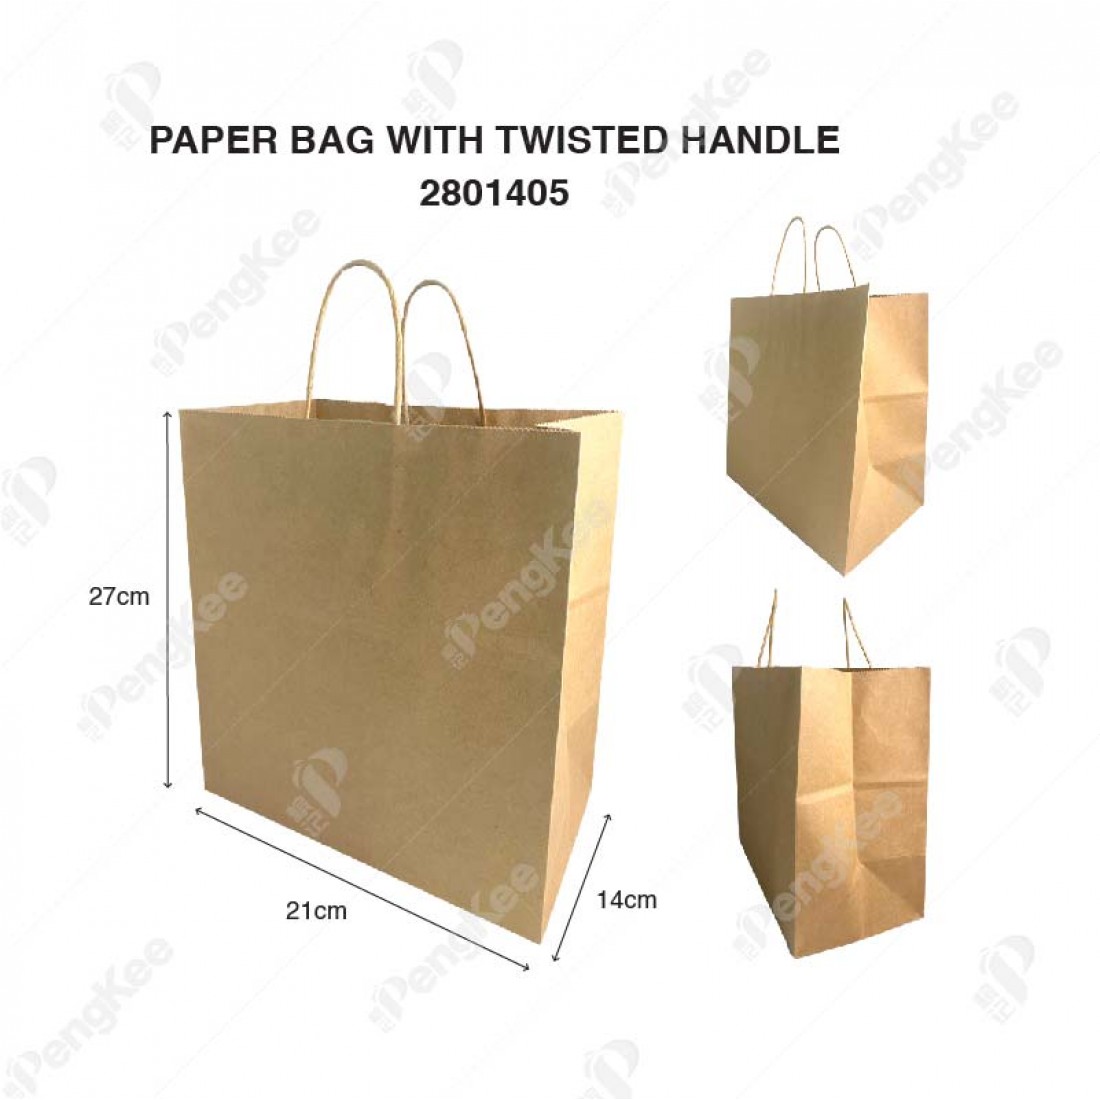 CARTON BROWN TWISTED HANDLE PAPER BAG NO.3- 27 X 21 X 15 (CM)